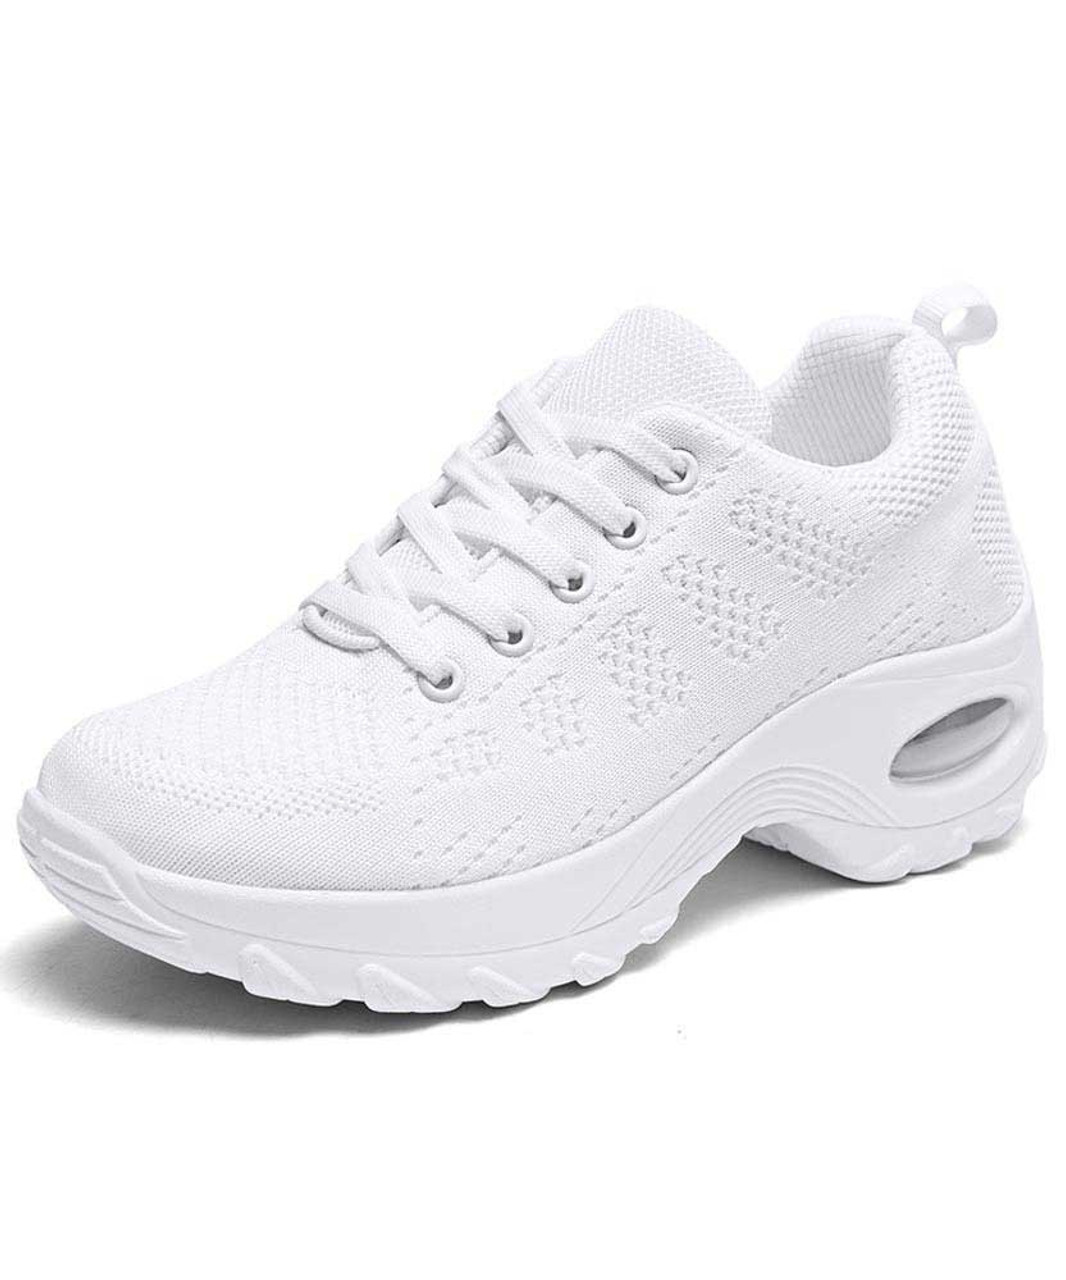 white bottom shoes